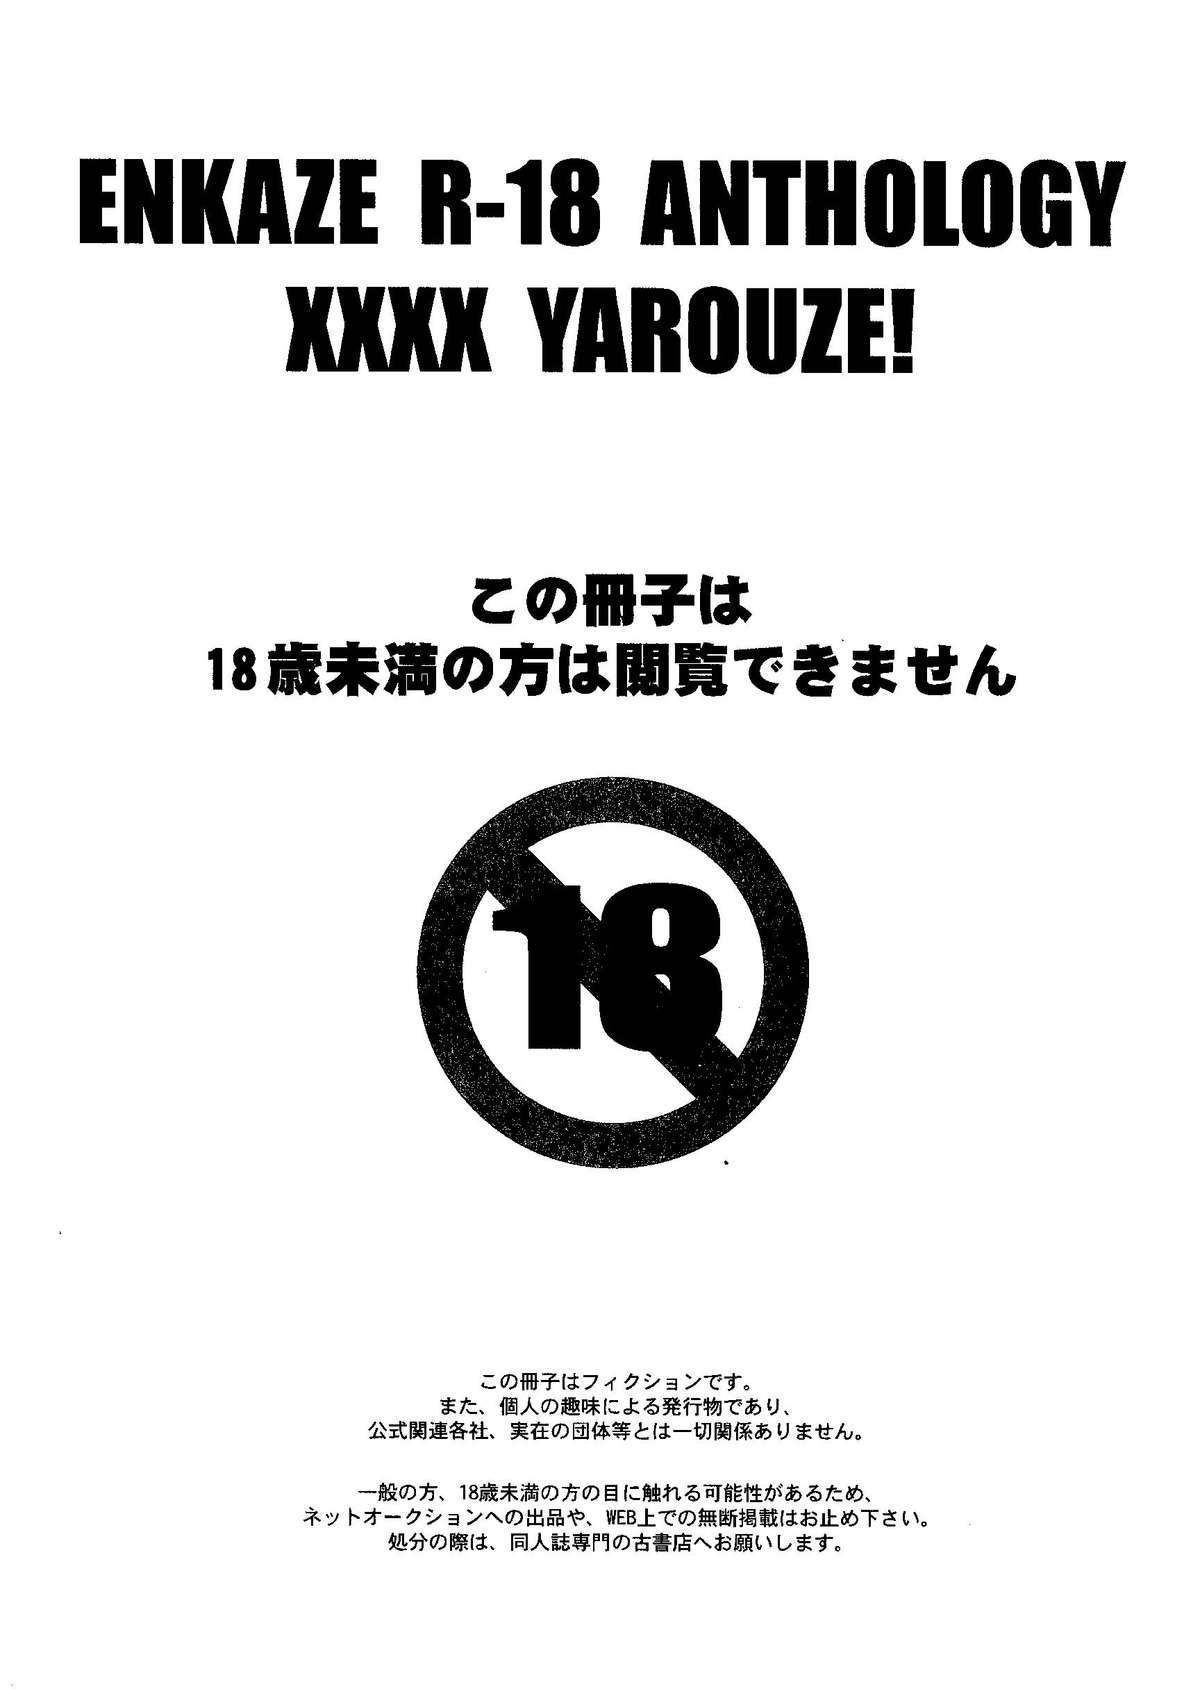 Gay Shaved Kirigakure Takaya (Aniki Otokodou) - ×××× Yarouze! (Inazuma Eleven) - Inazuma eleven Crazy - Page 7